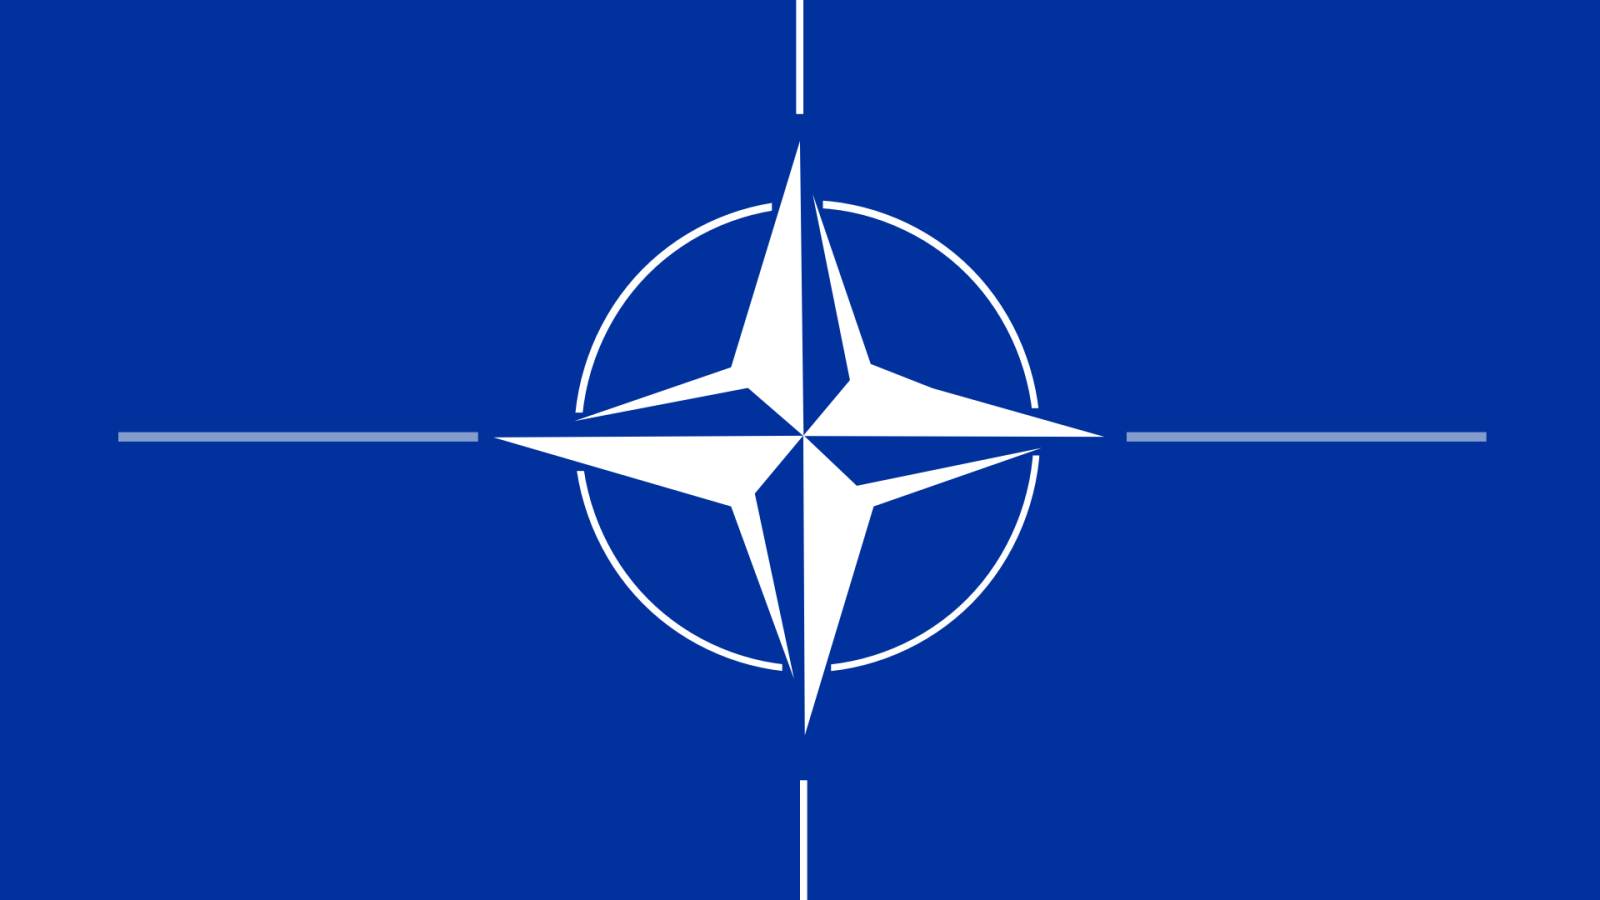 NATO Anunt privind Atacurile Ucrainei pe Teritoriul Rusiei in Plin Razboi